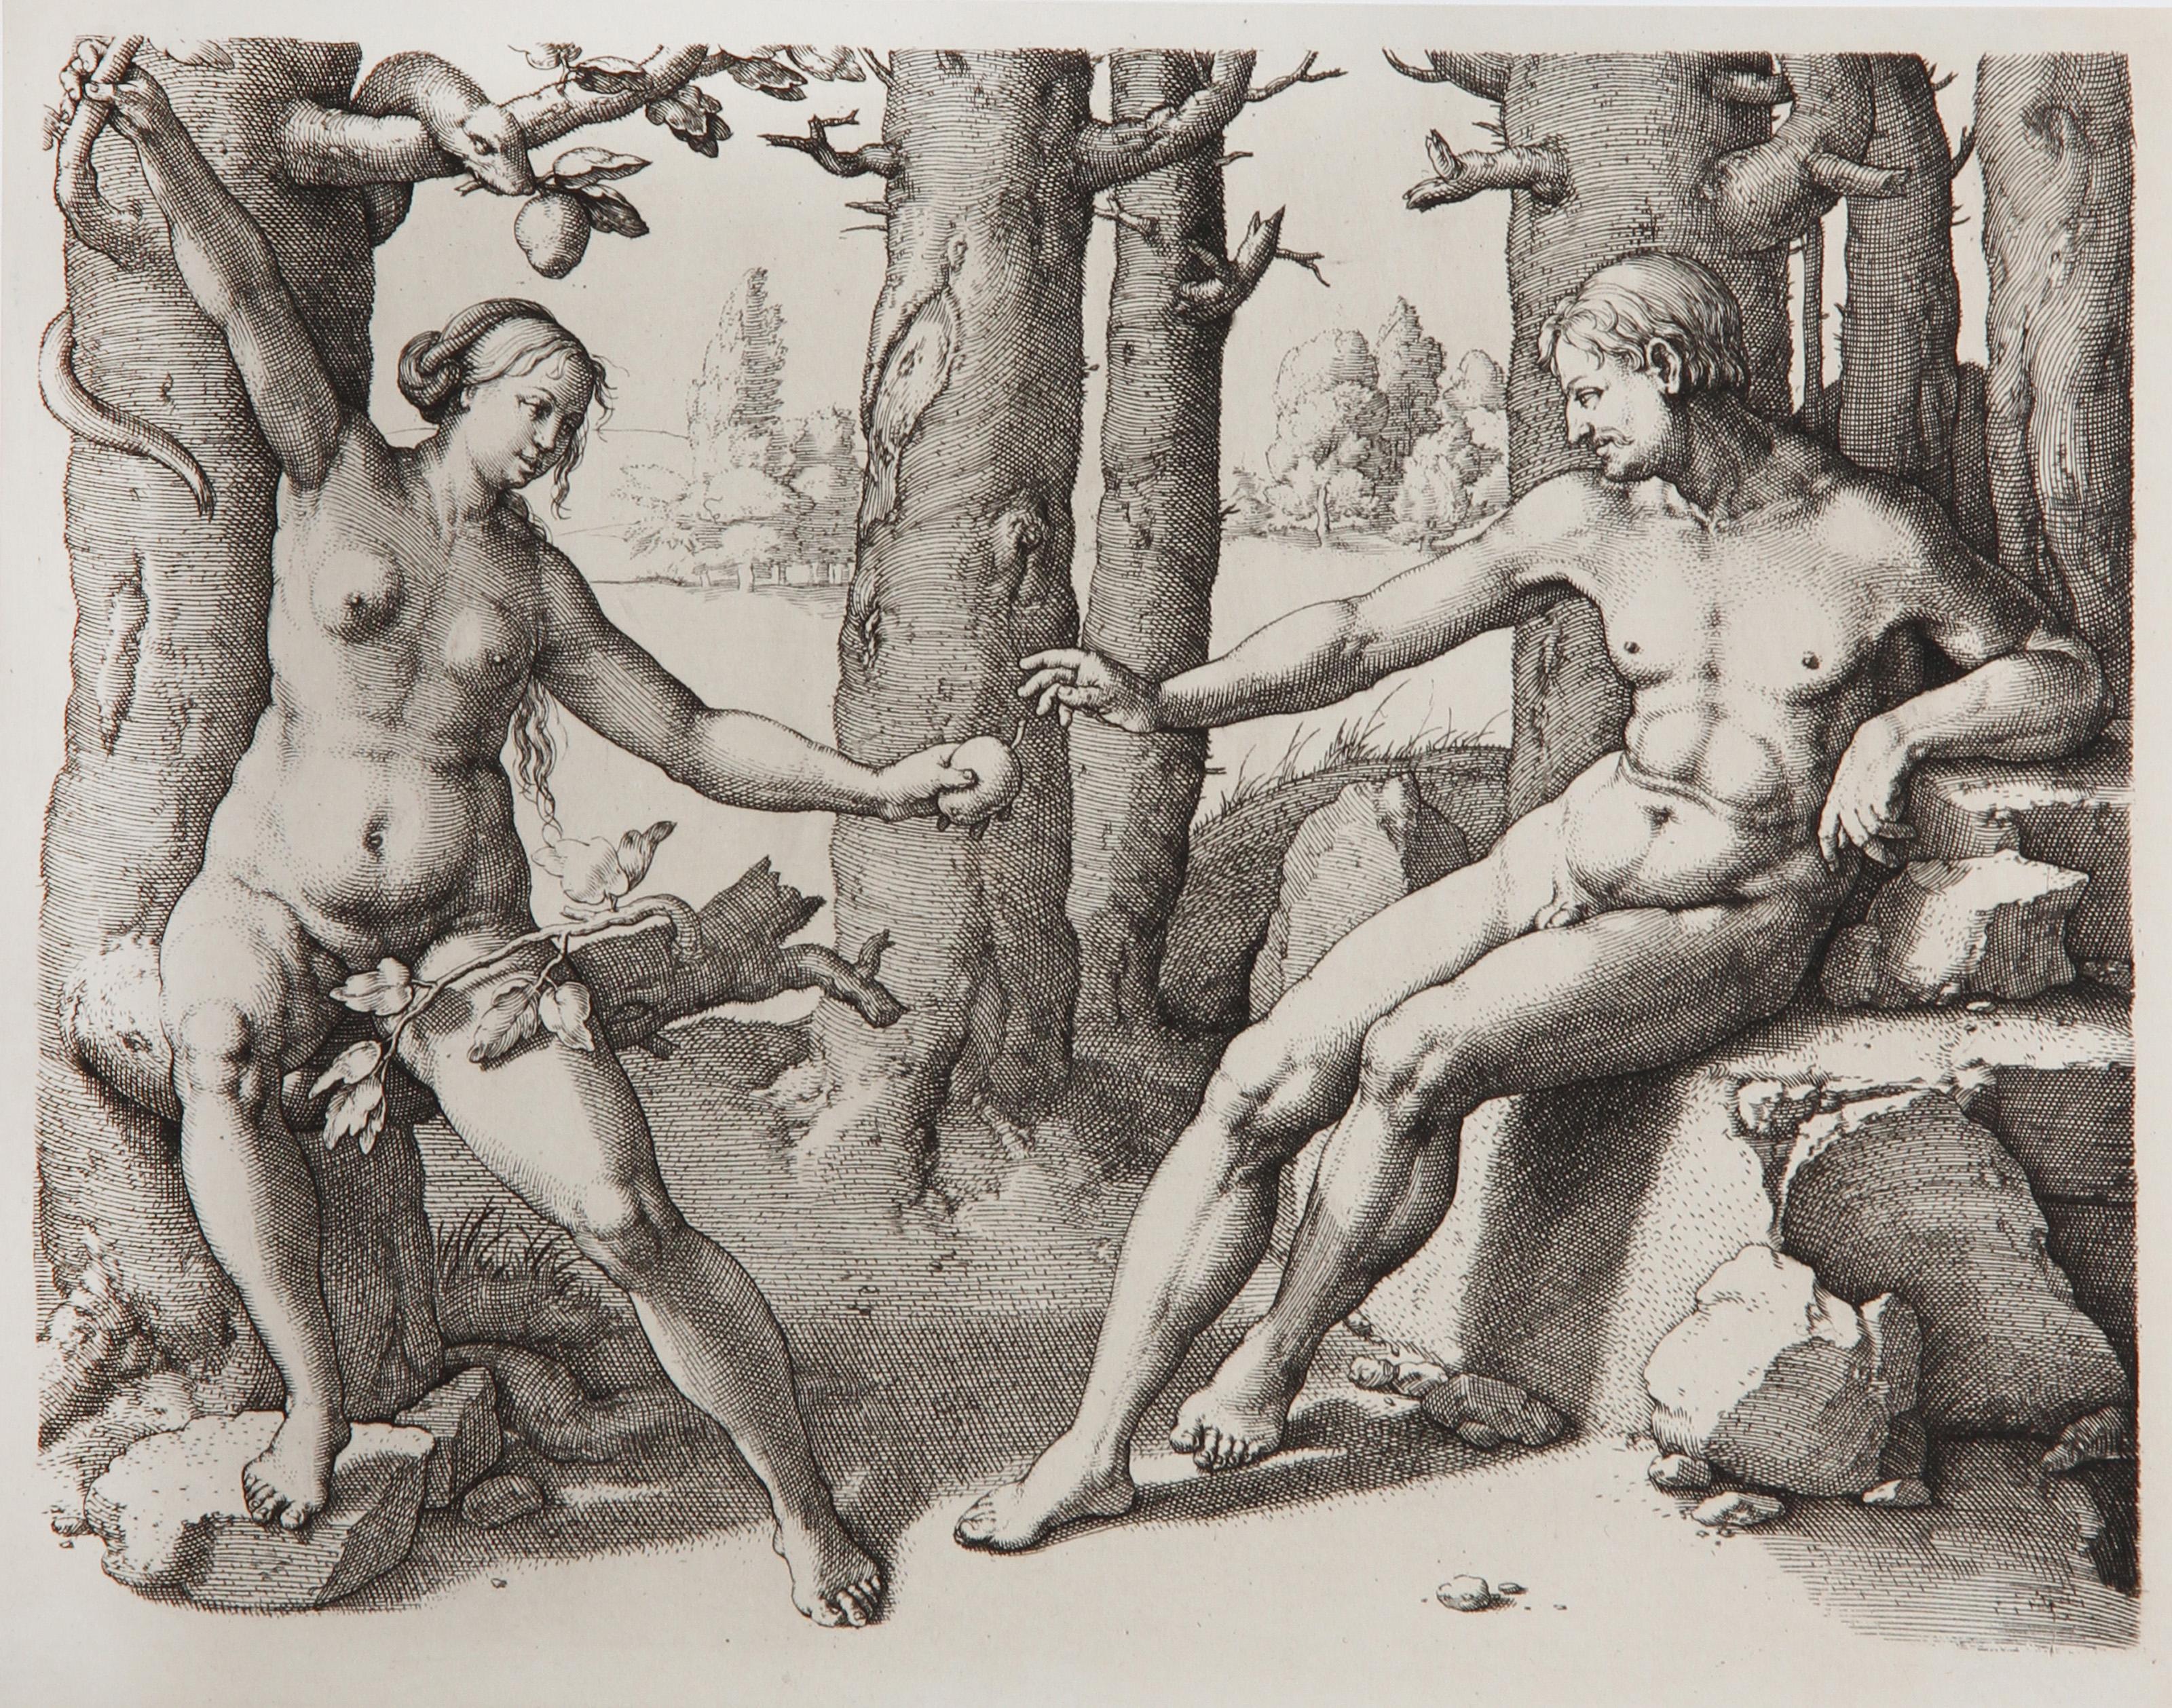 Artist: Lucas van Leyden, After by Amand Durand, Dutch (1494 - 1533) - Adam et Eve, Year: 1873, Medium: Heliogravure, Size: 8  x 10 in. (20.32  x 25.4 cm), Printer: Amand Durand, Description: French Engraver and painter Charles Amand Durand,